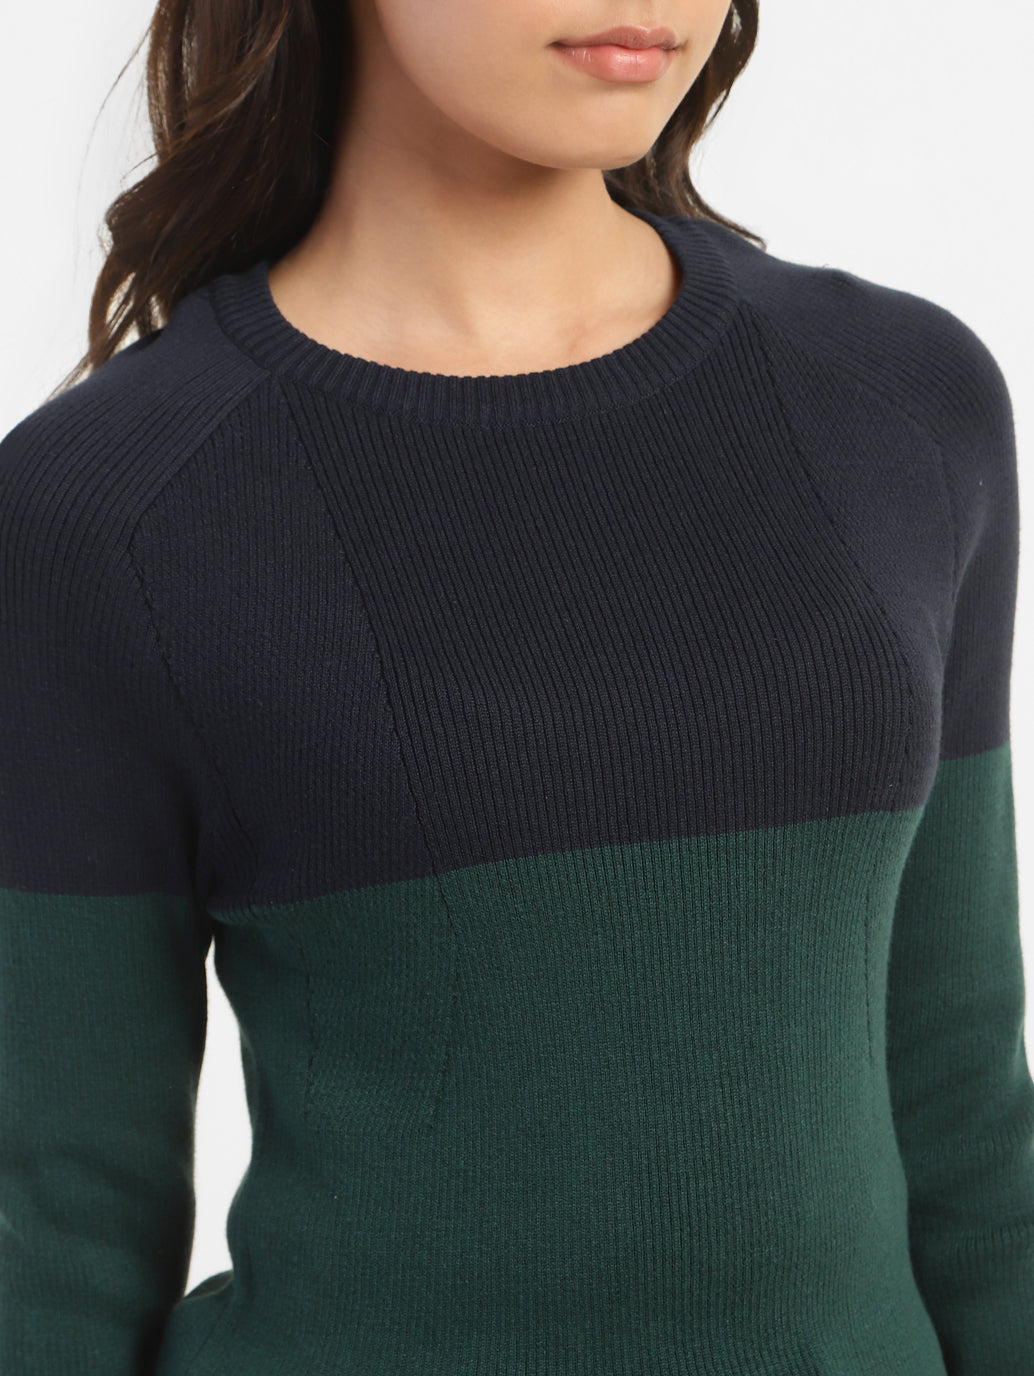 Women's Colorblock Crew Neck Sweater